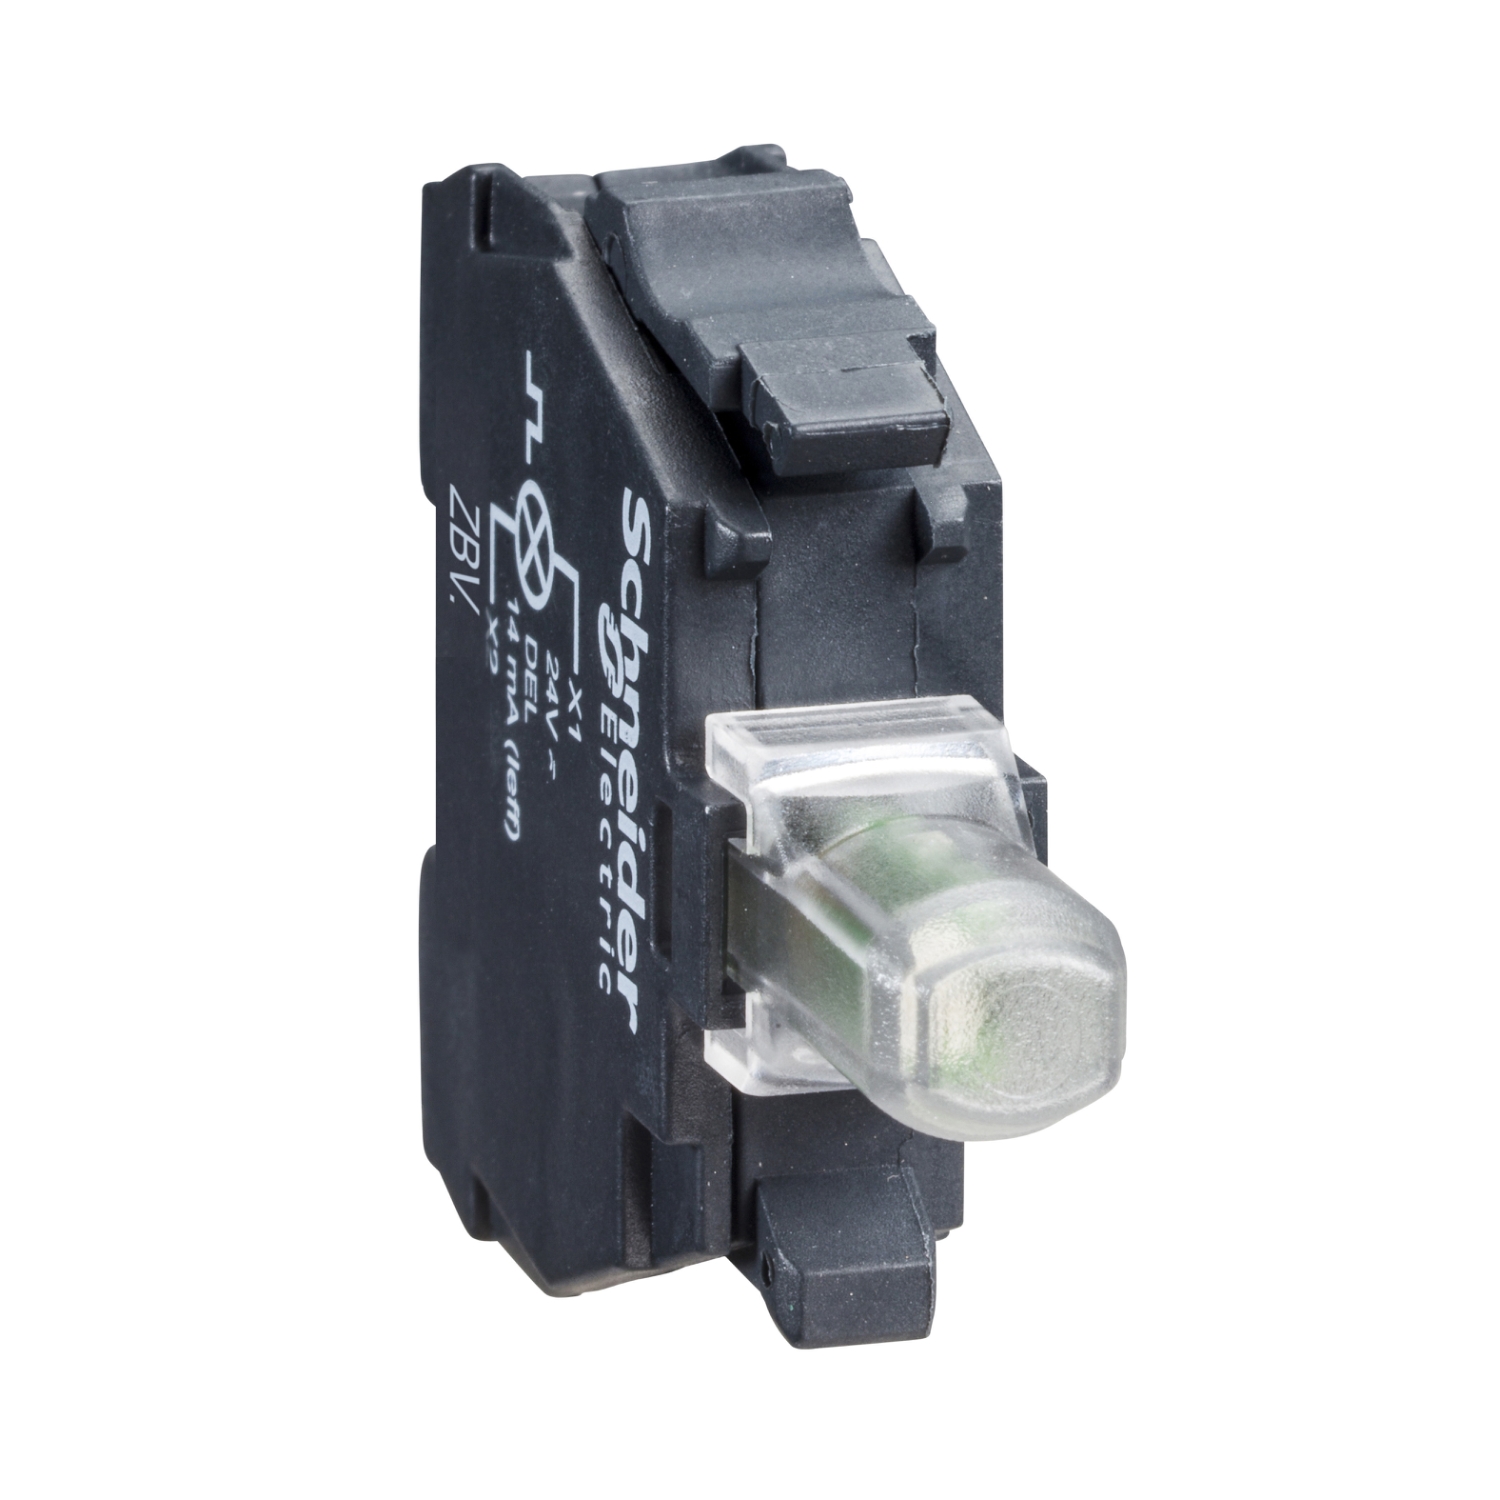 Light block for head 22mm, Harmony XB4, blue, integral LED, screw clamp terminal, 24…120V AC DC